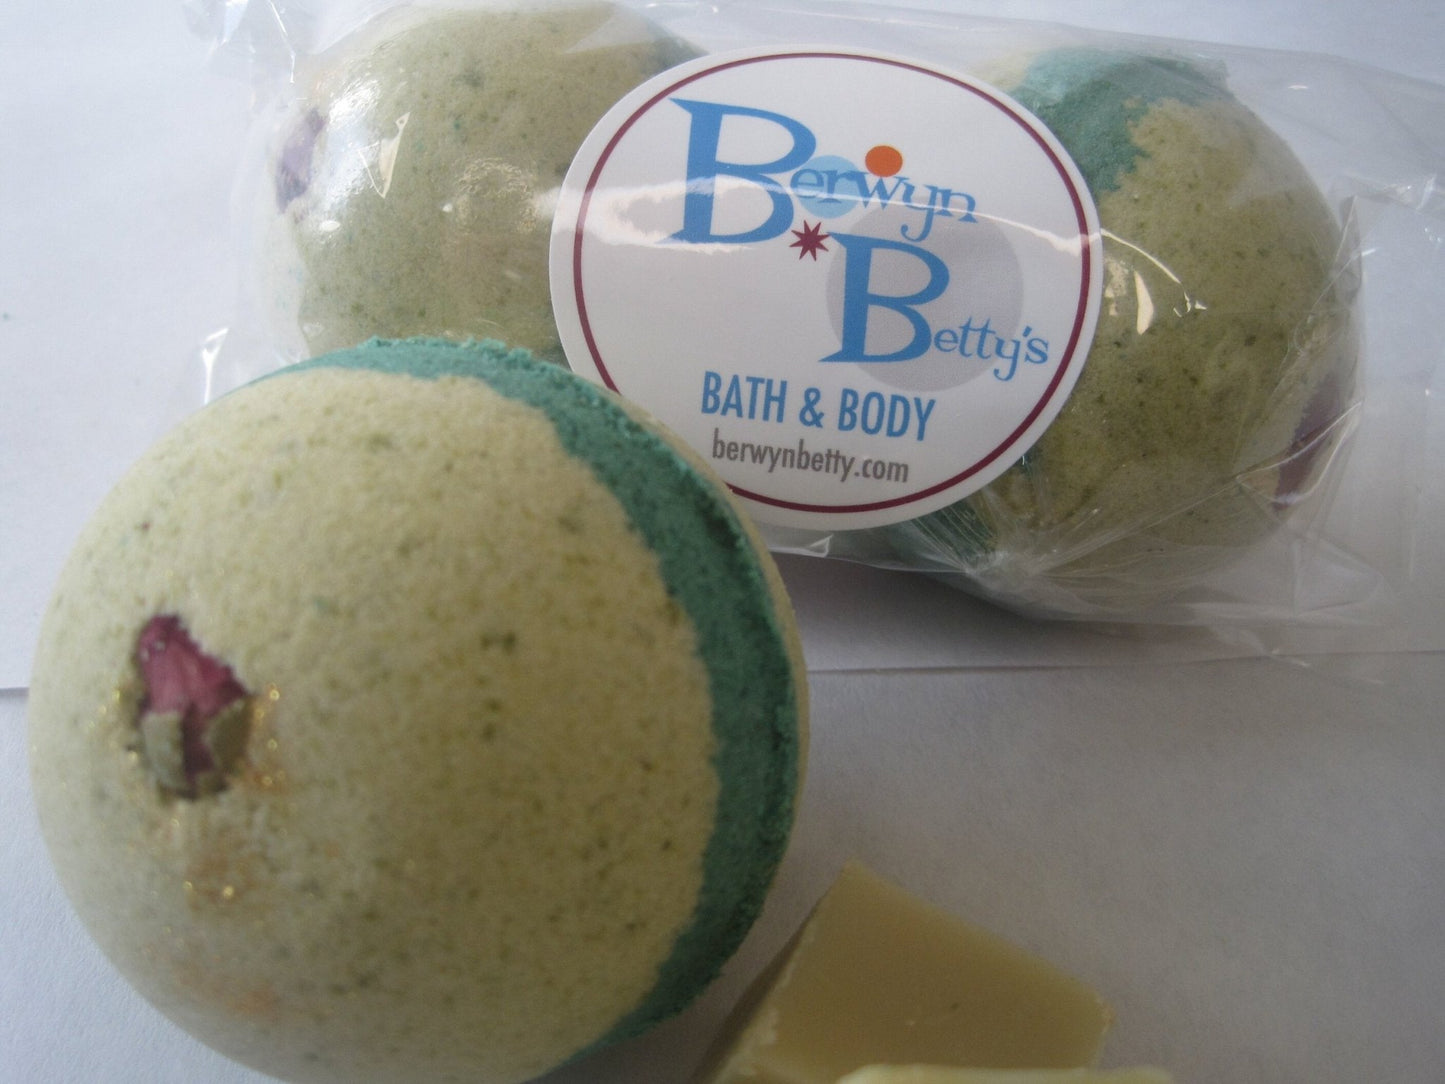 Balsam Fir Scented Bath Bombs with Handmade Soap Inside - 2 ct - Berwyn Betty's Bath & Body Shop